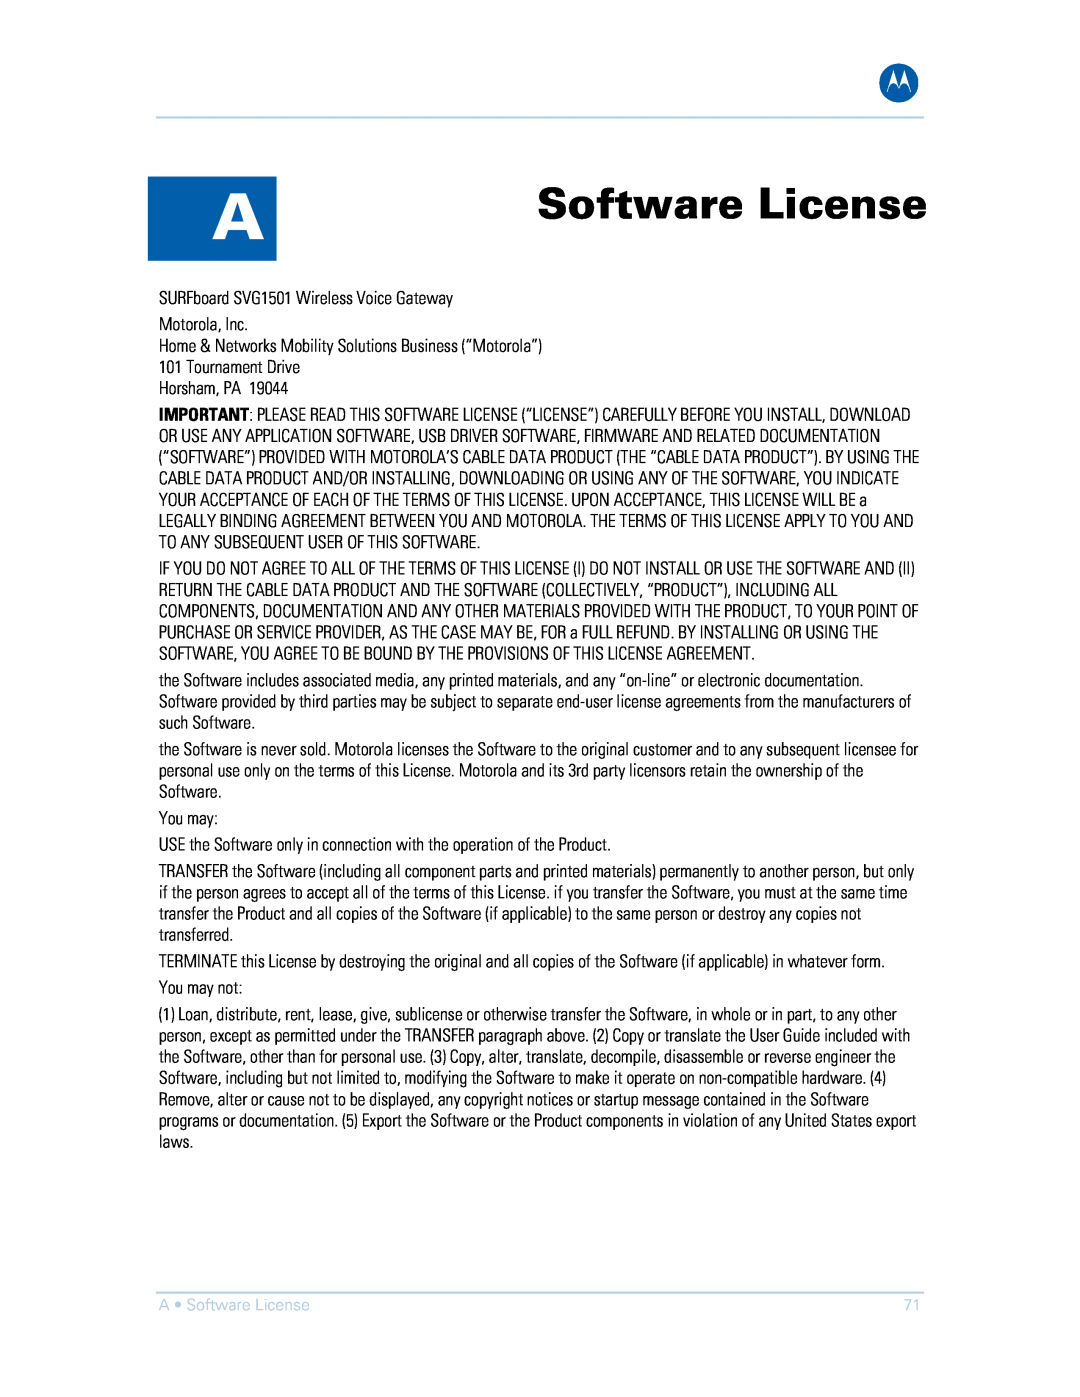 Motorola SVG1501E, SVG1501UE manual Software License 